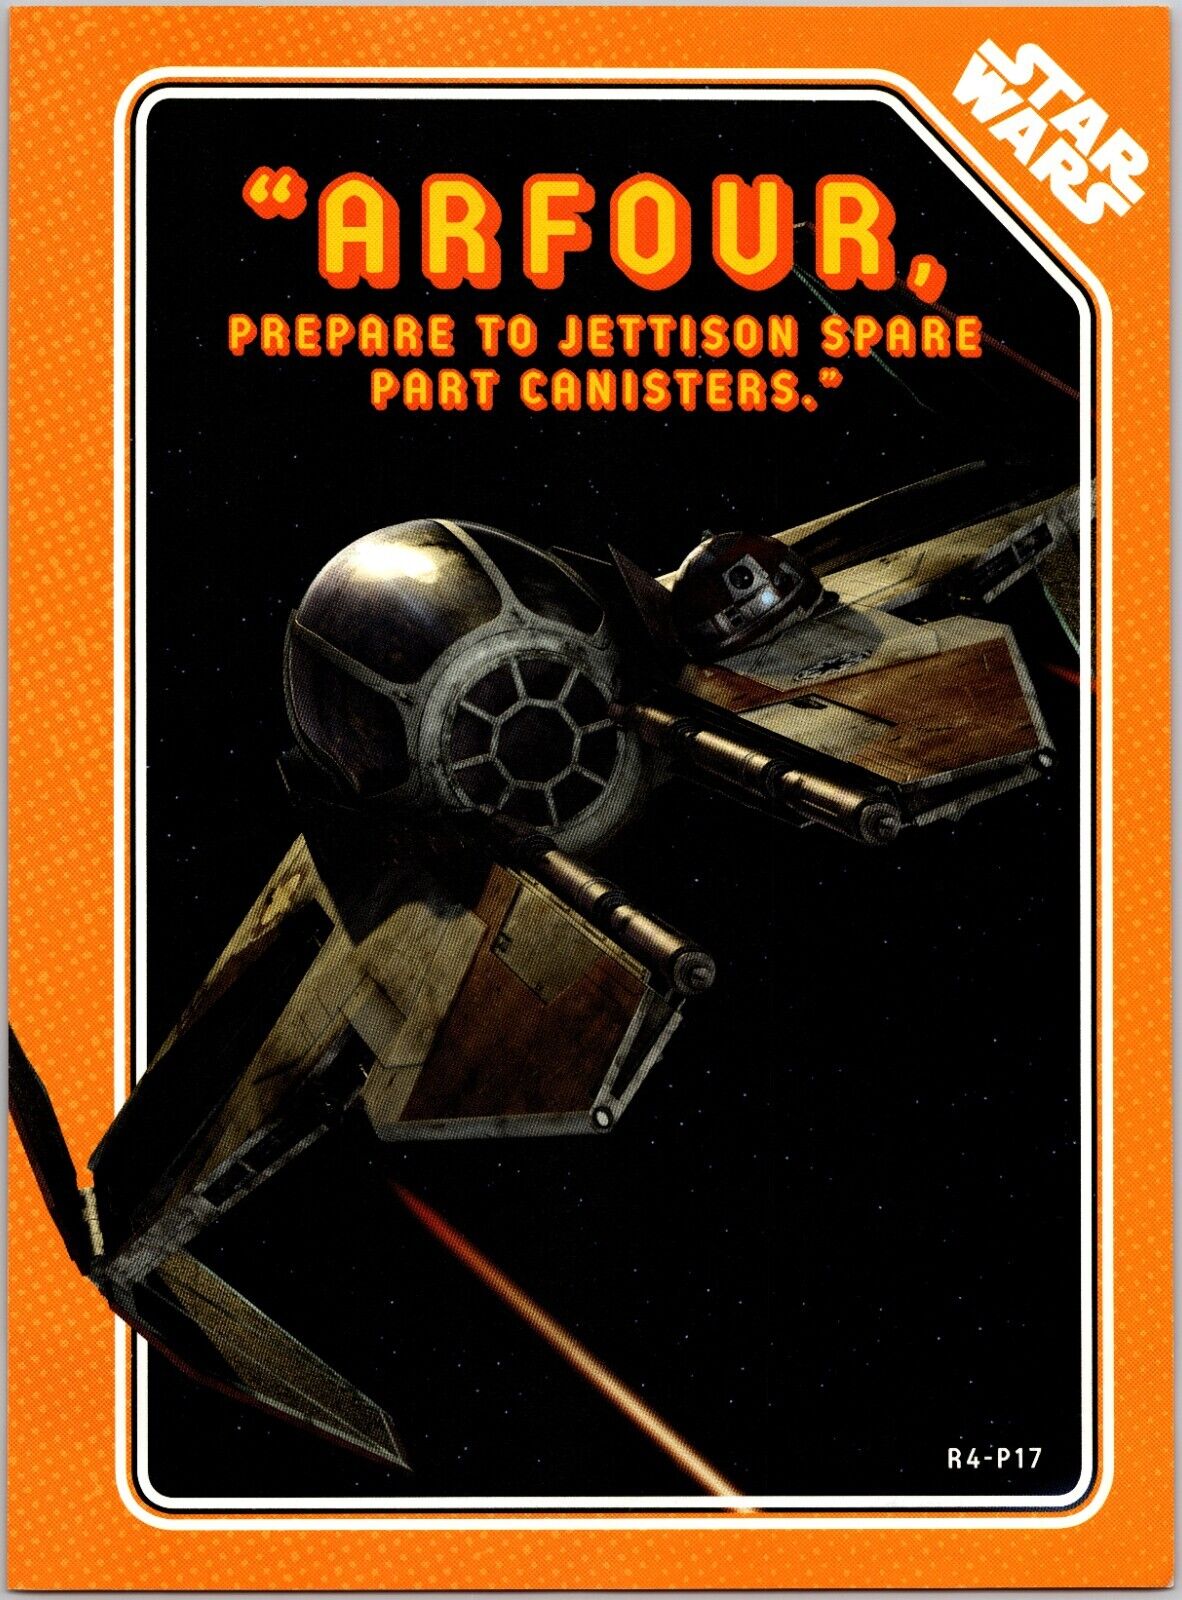 R4-P17 Star Wars Poster Art PROMO Original Pin-Up Movie Trivia